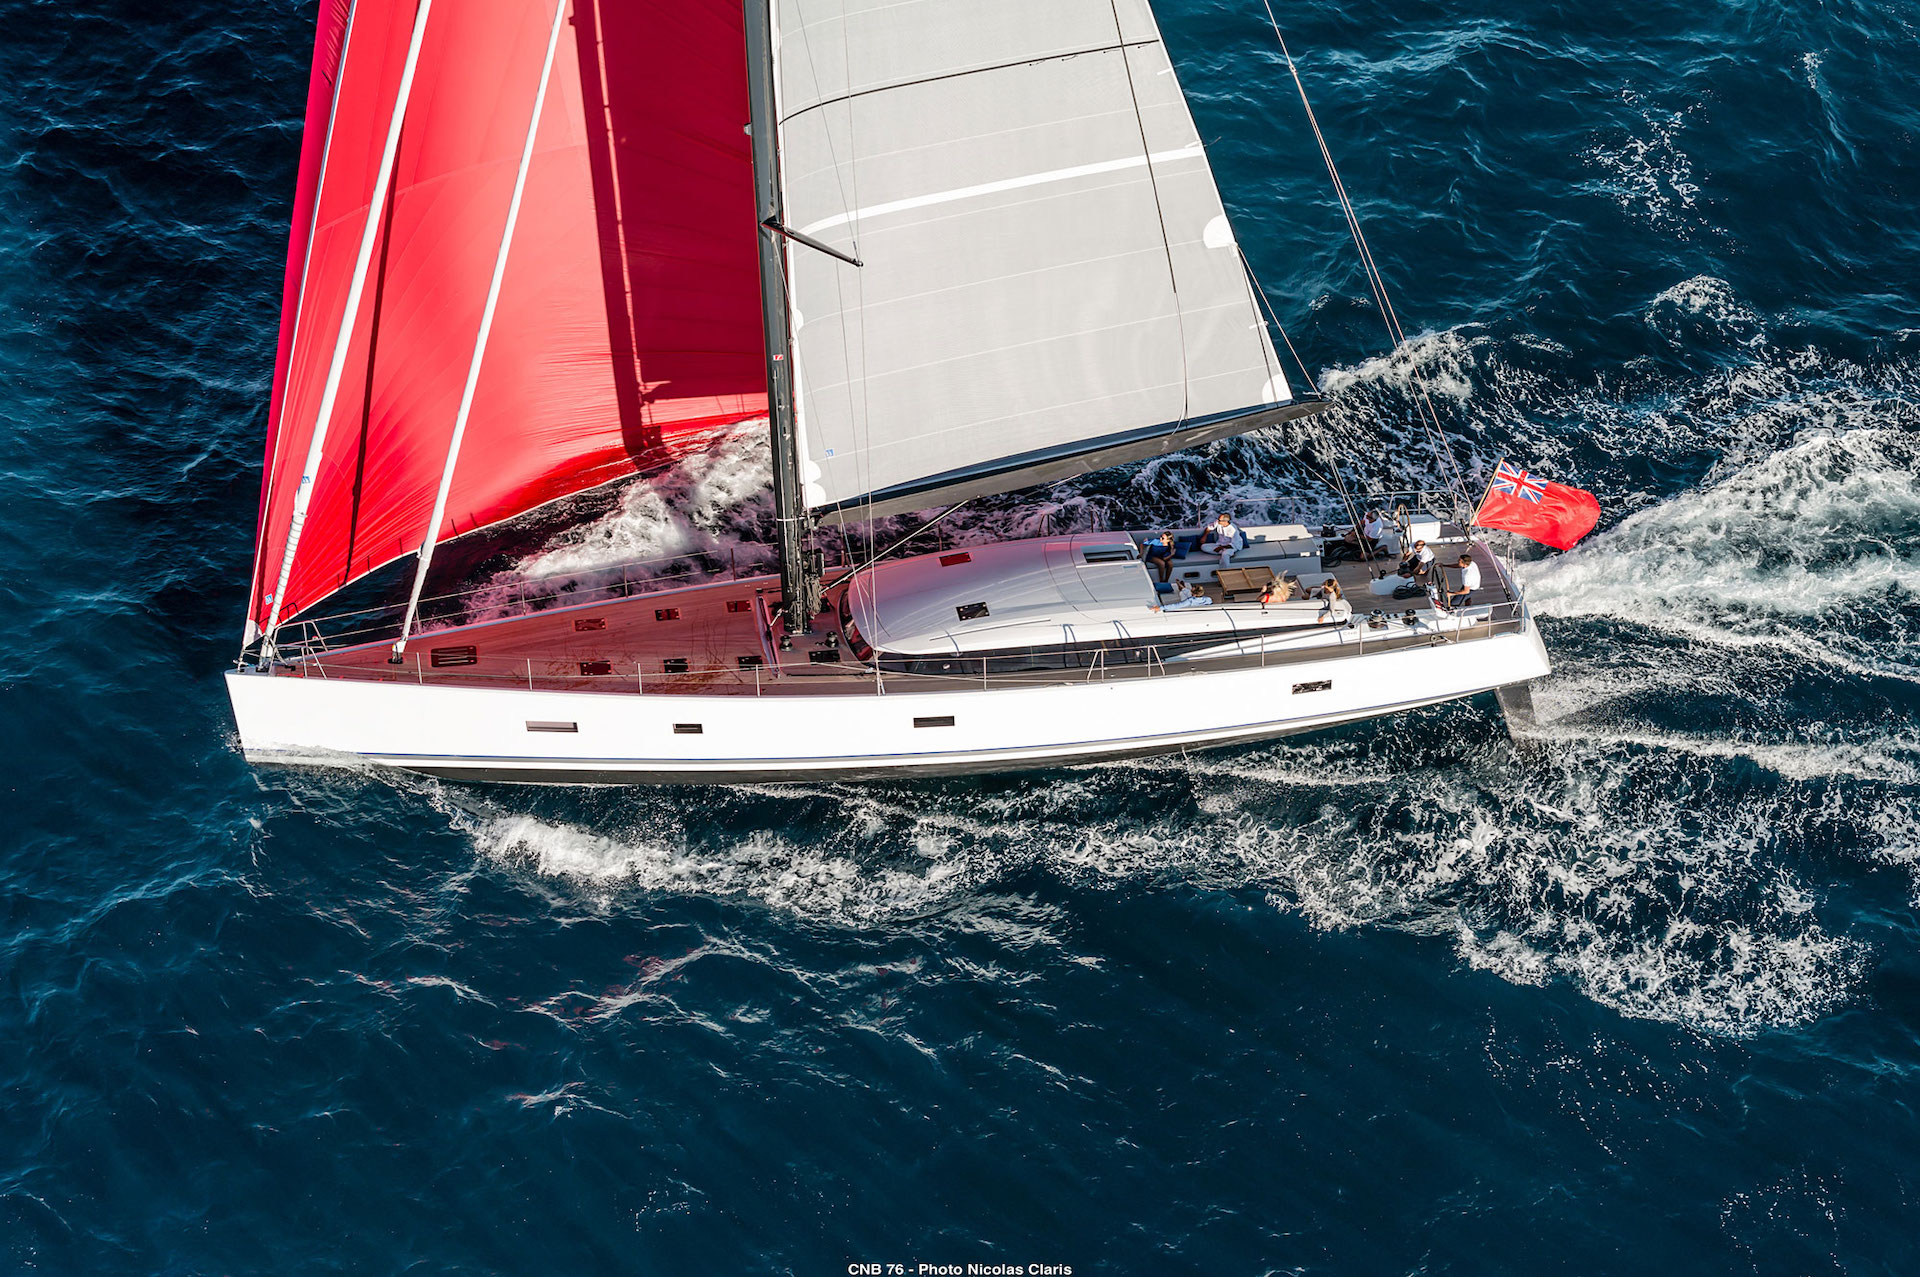 Croatian yacht charter Aenea sailing